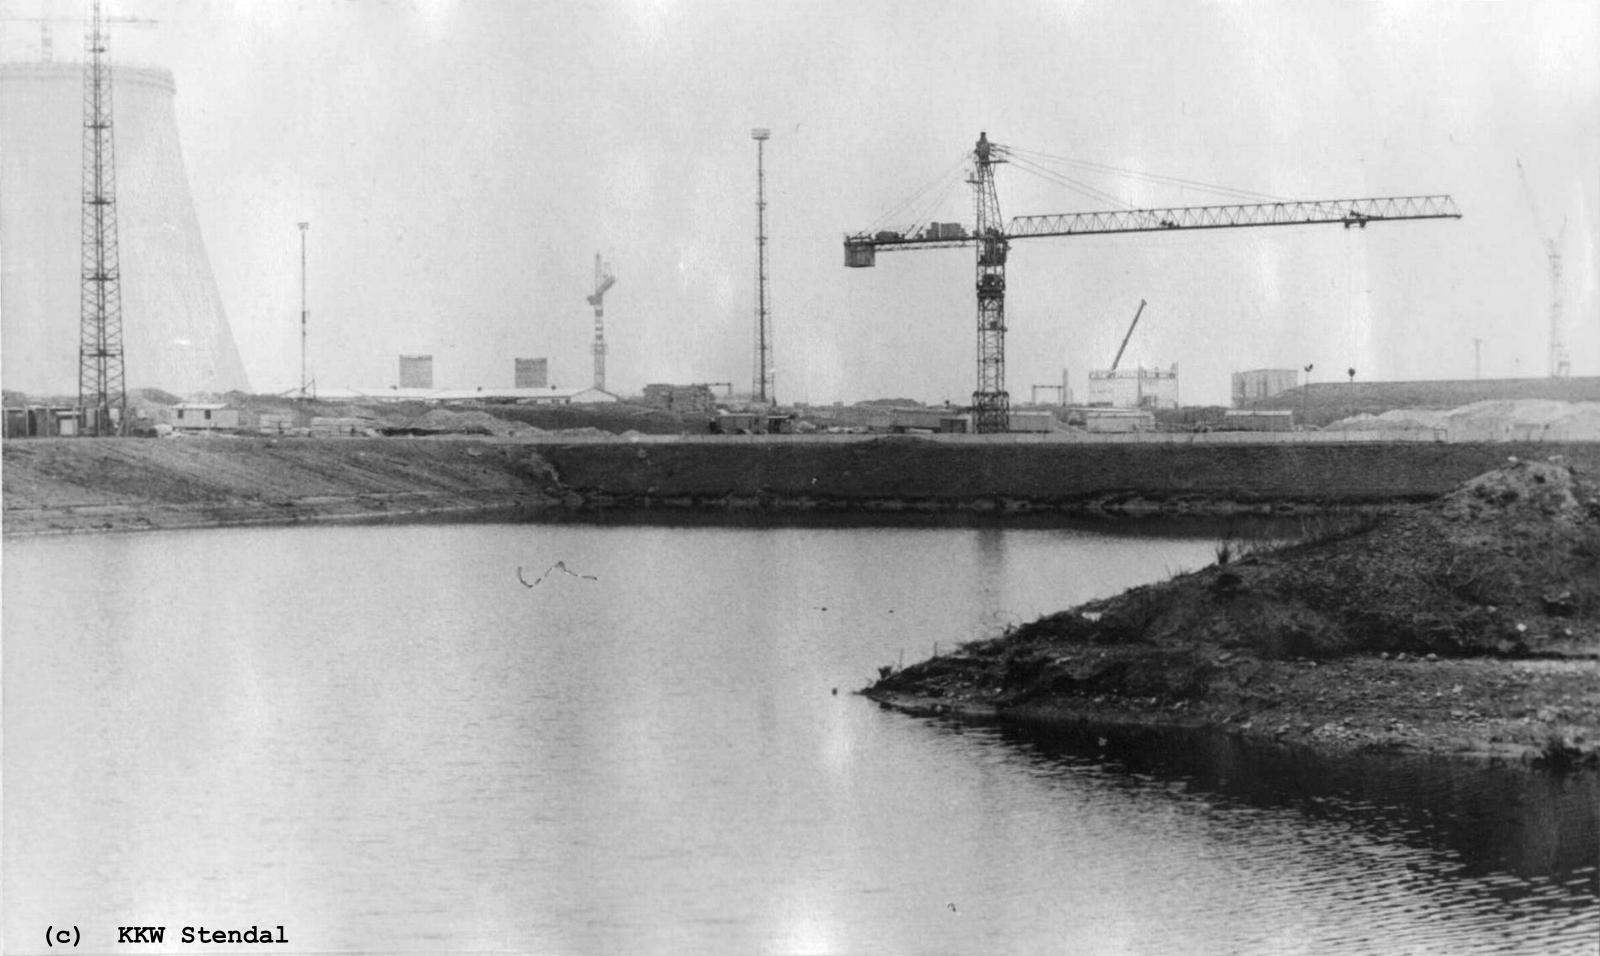  AKW Stendal, Baustelle 1988, Einlaufkanal 